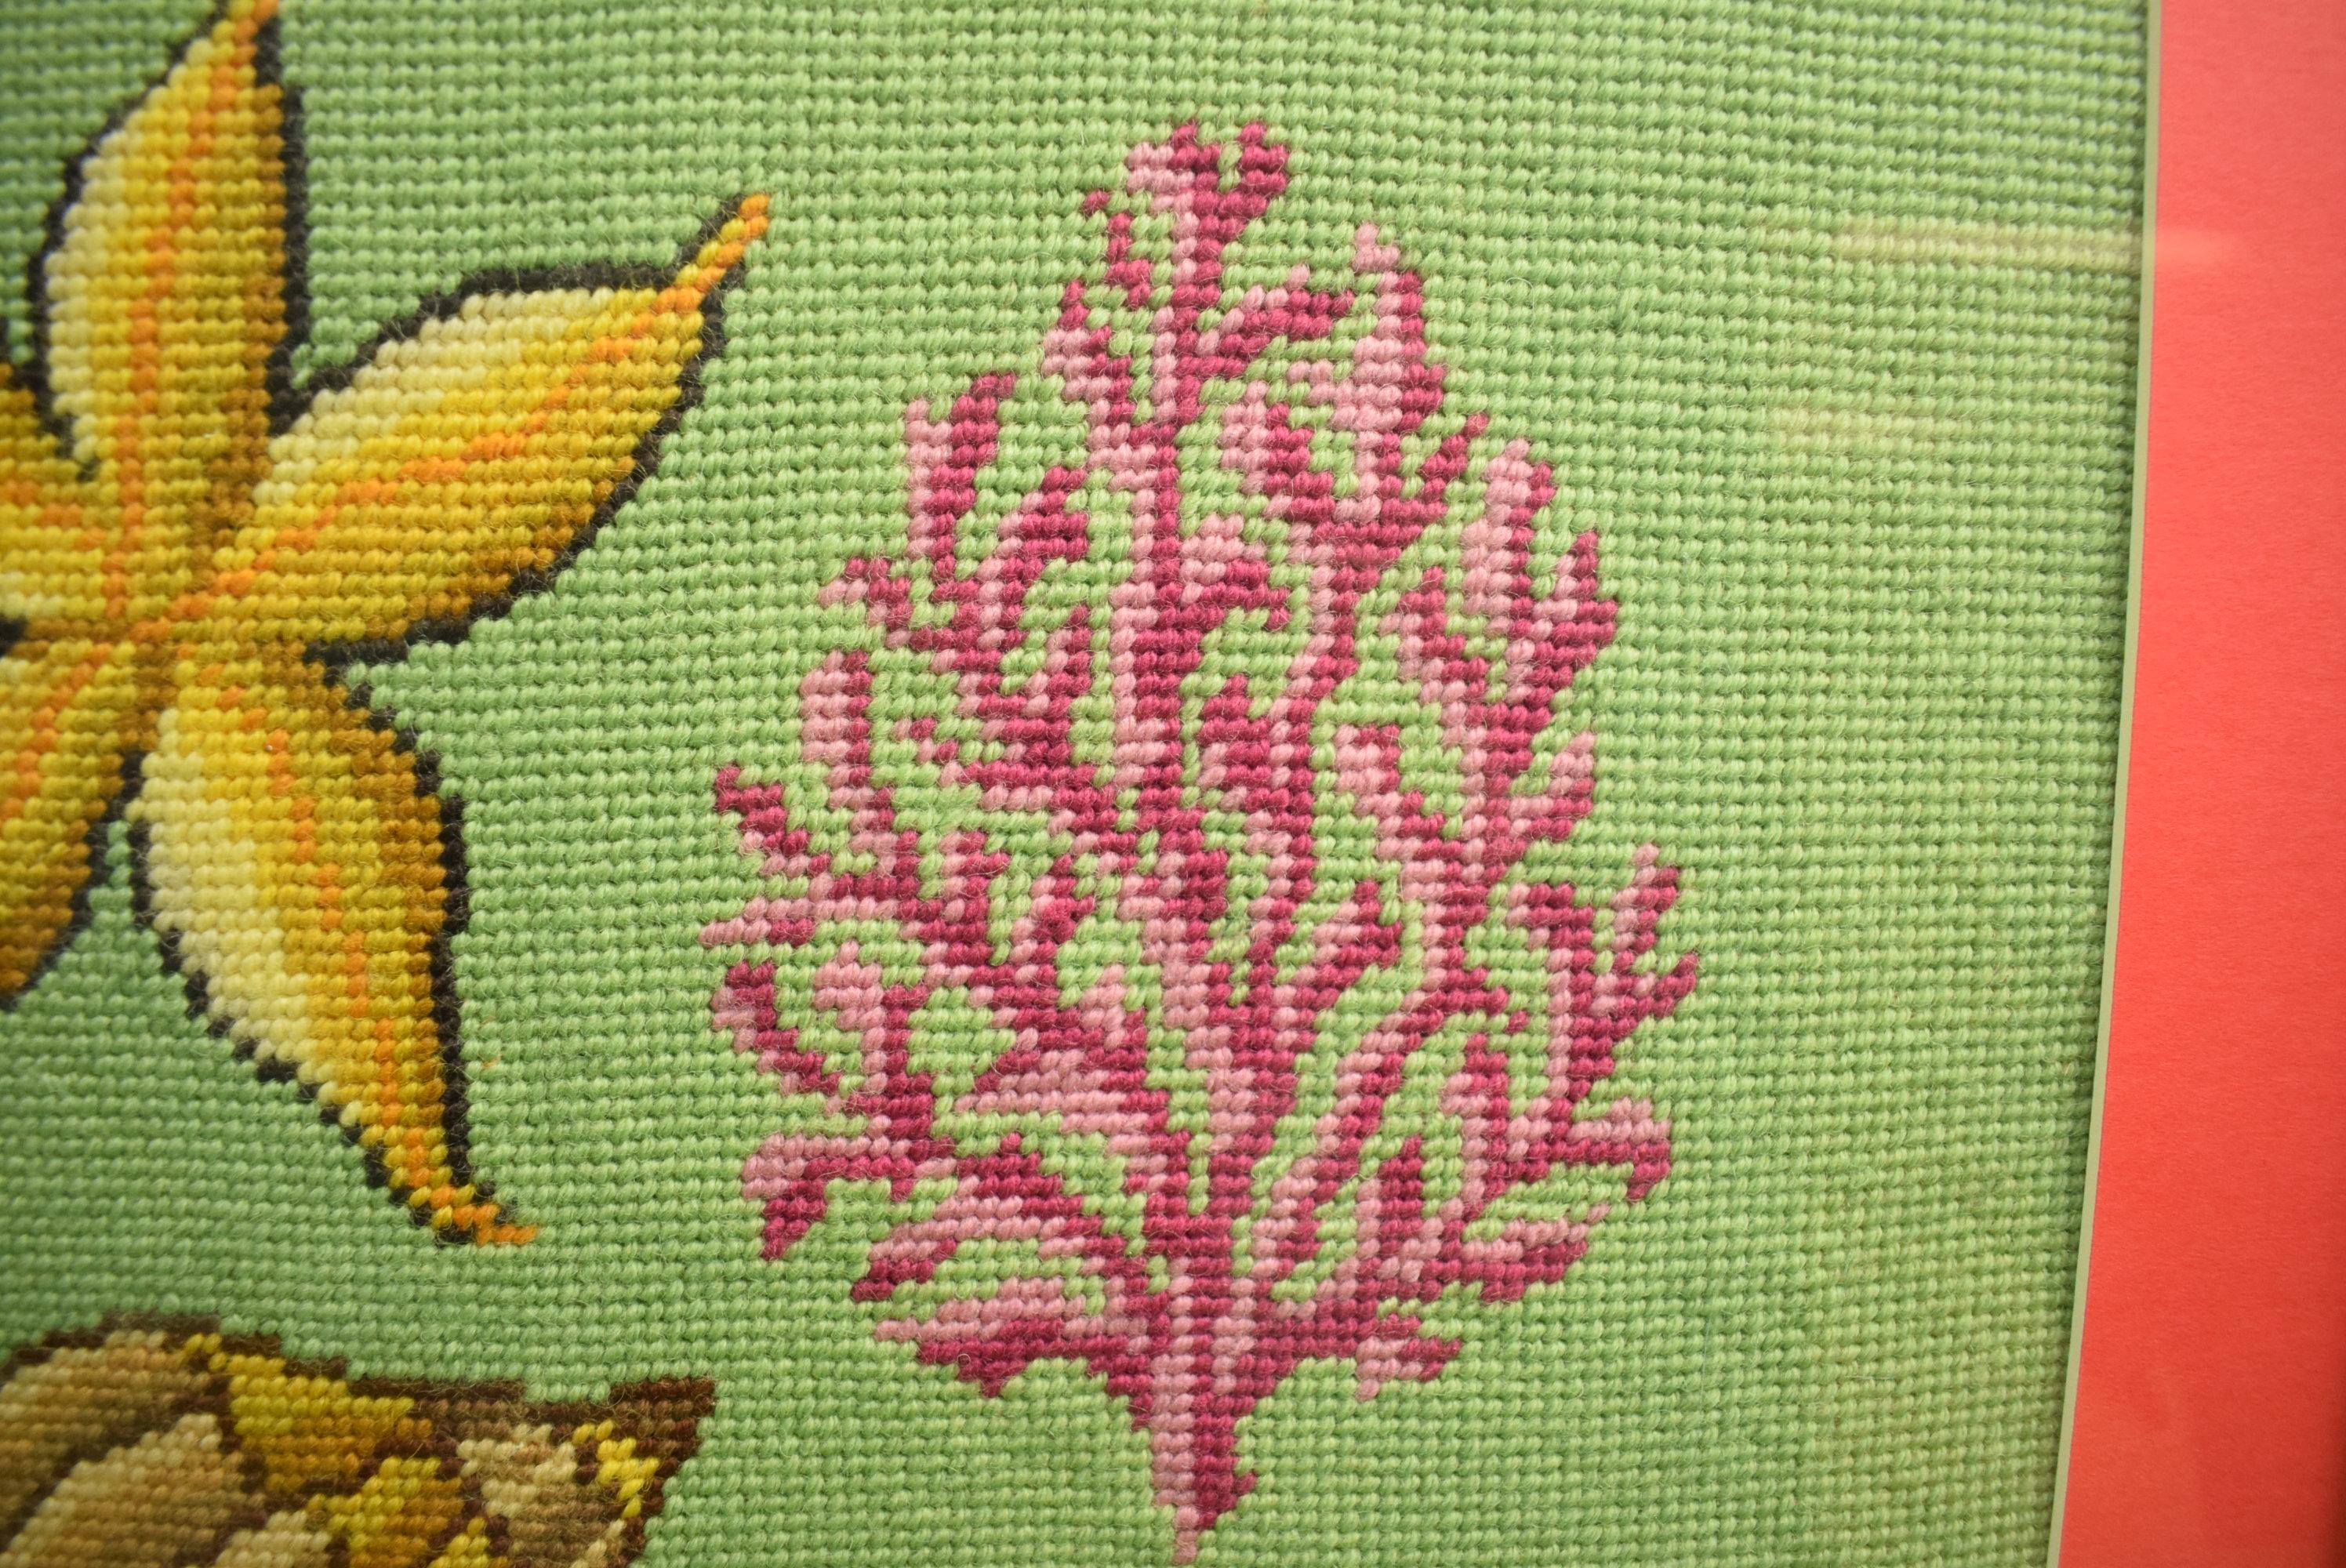 Hand-needlepoint c1960s panel w/ three seashells & a coral branch

Art Sz: 14 1/2